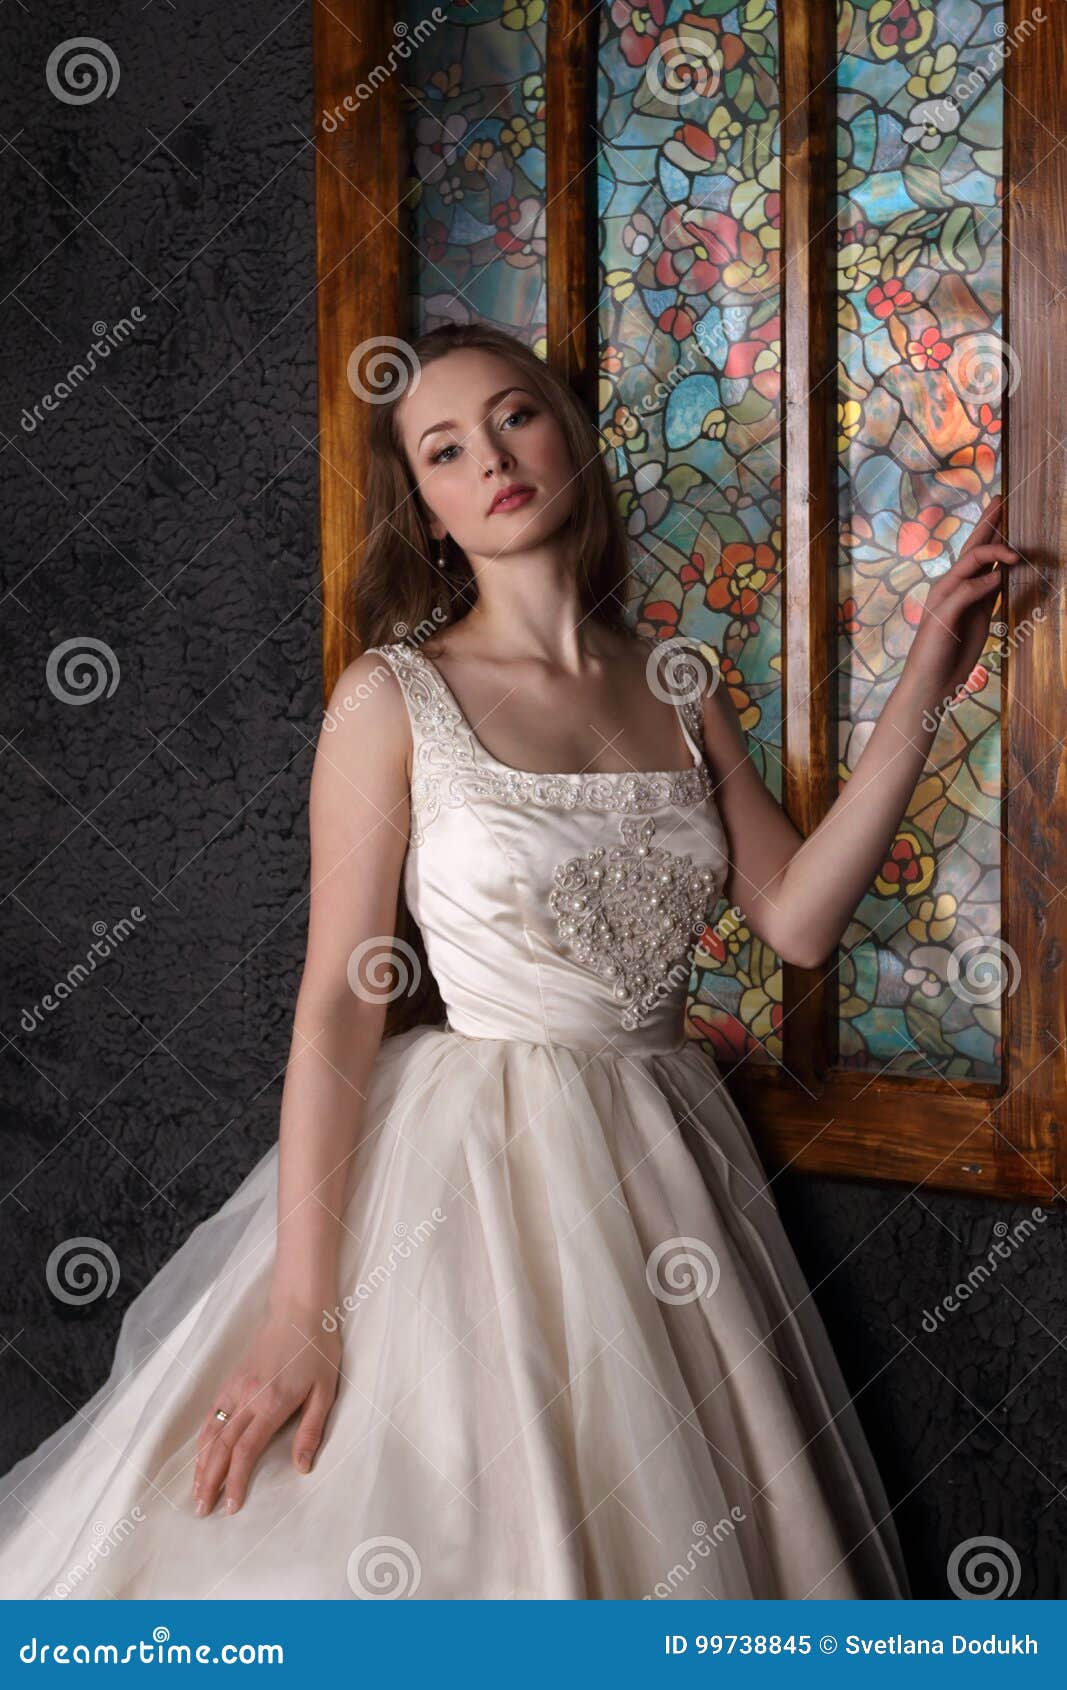 Cotton dress design for girlsdifferent style long frockbeach poses with  dresslong midi dress  YouTube